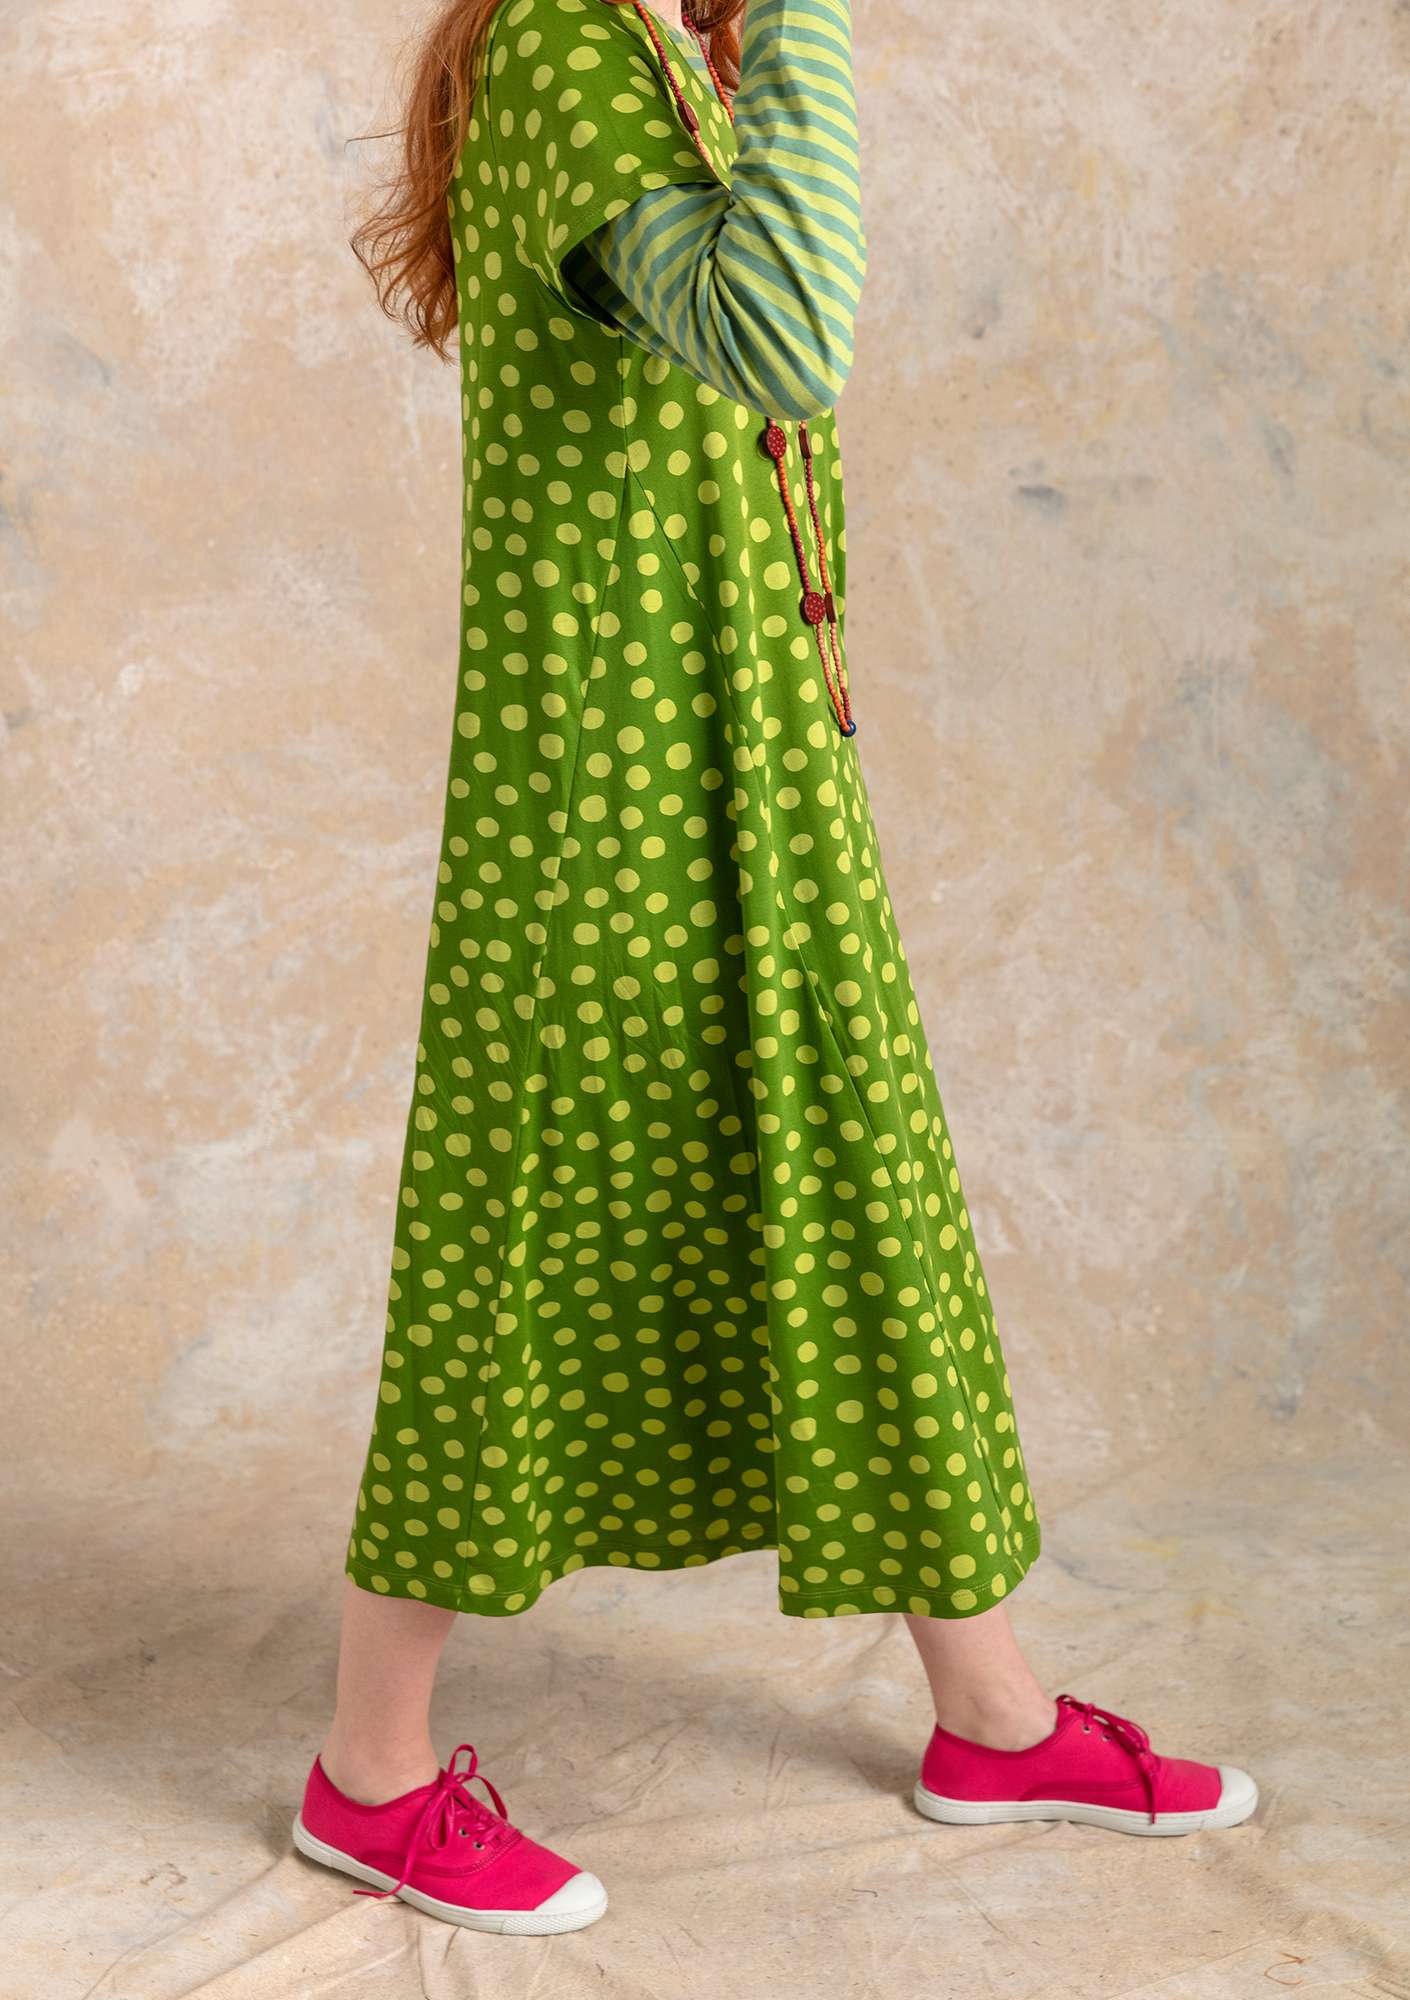 Cordelia jersey dress cactus/patterned